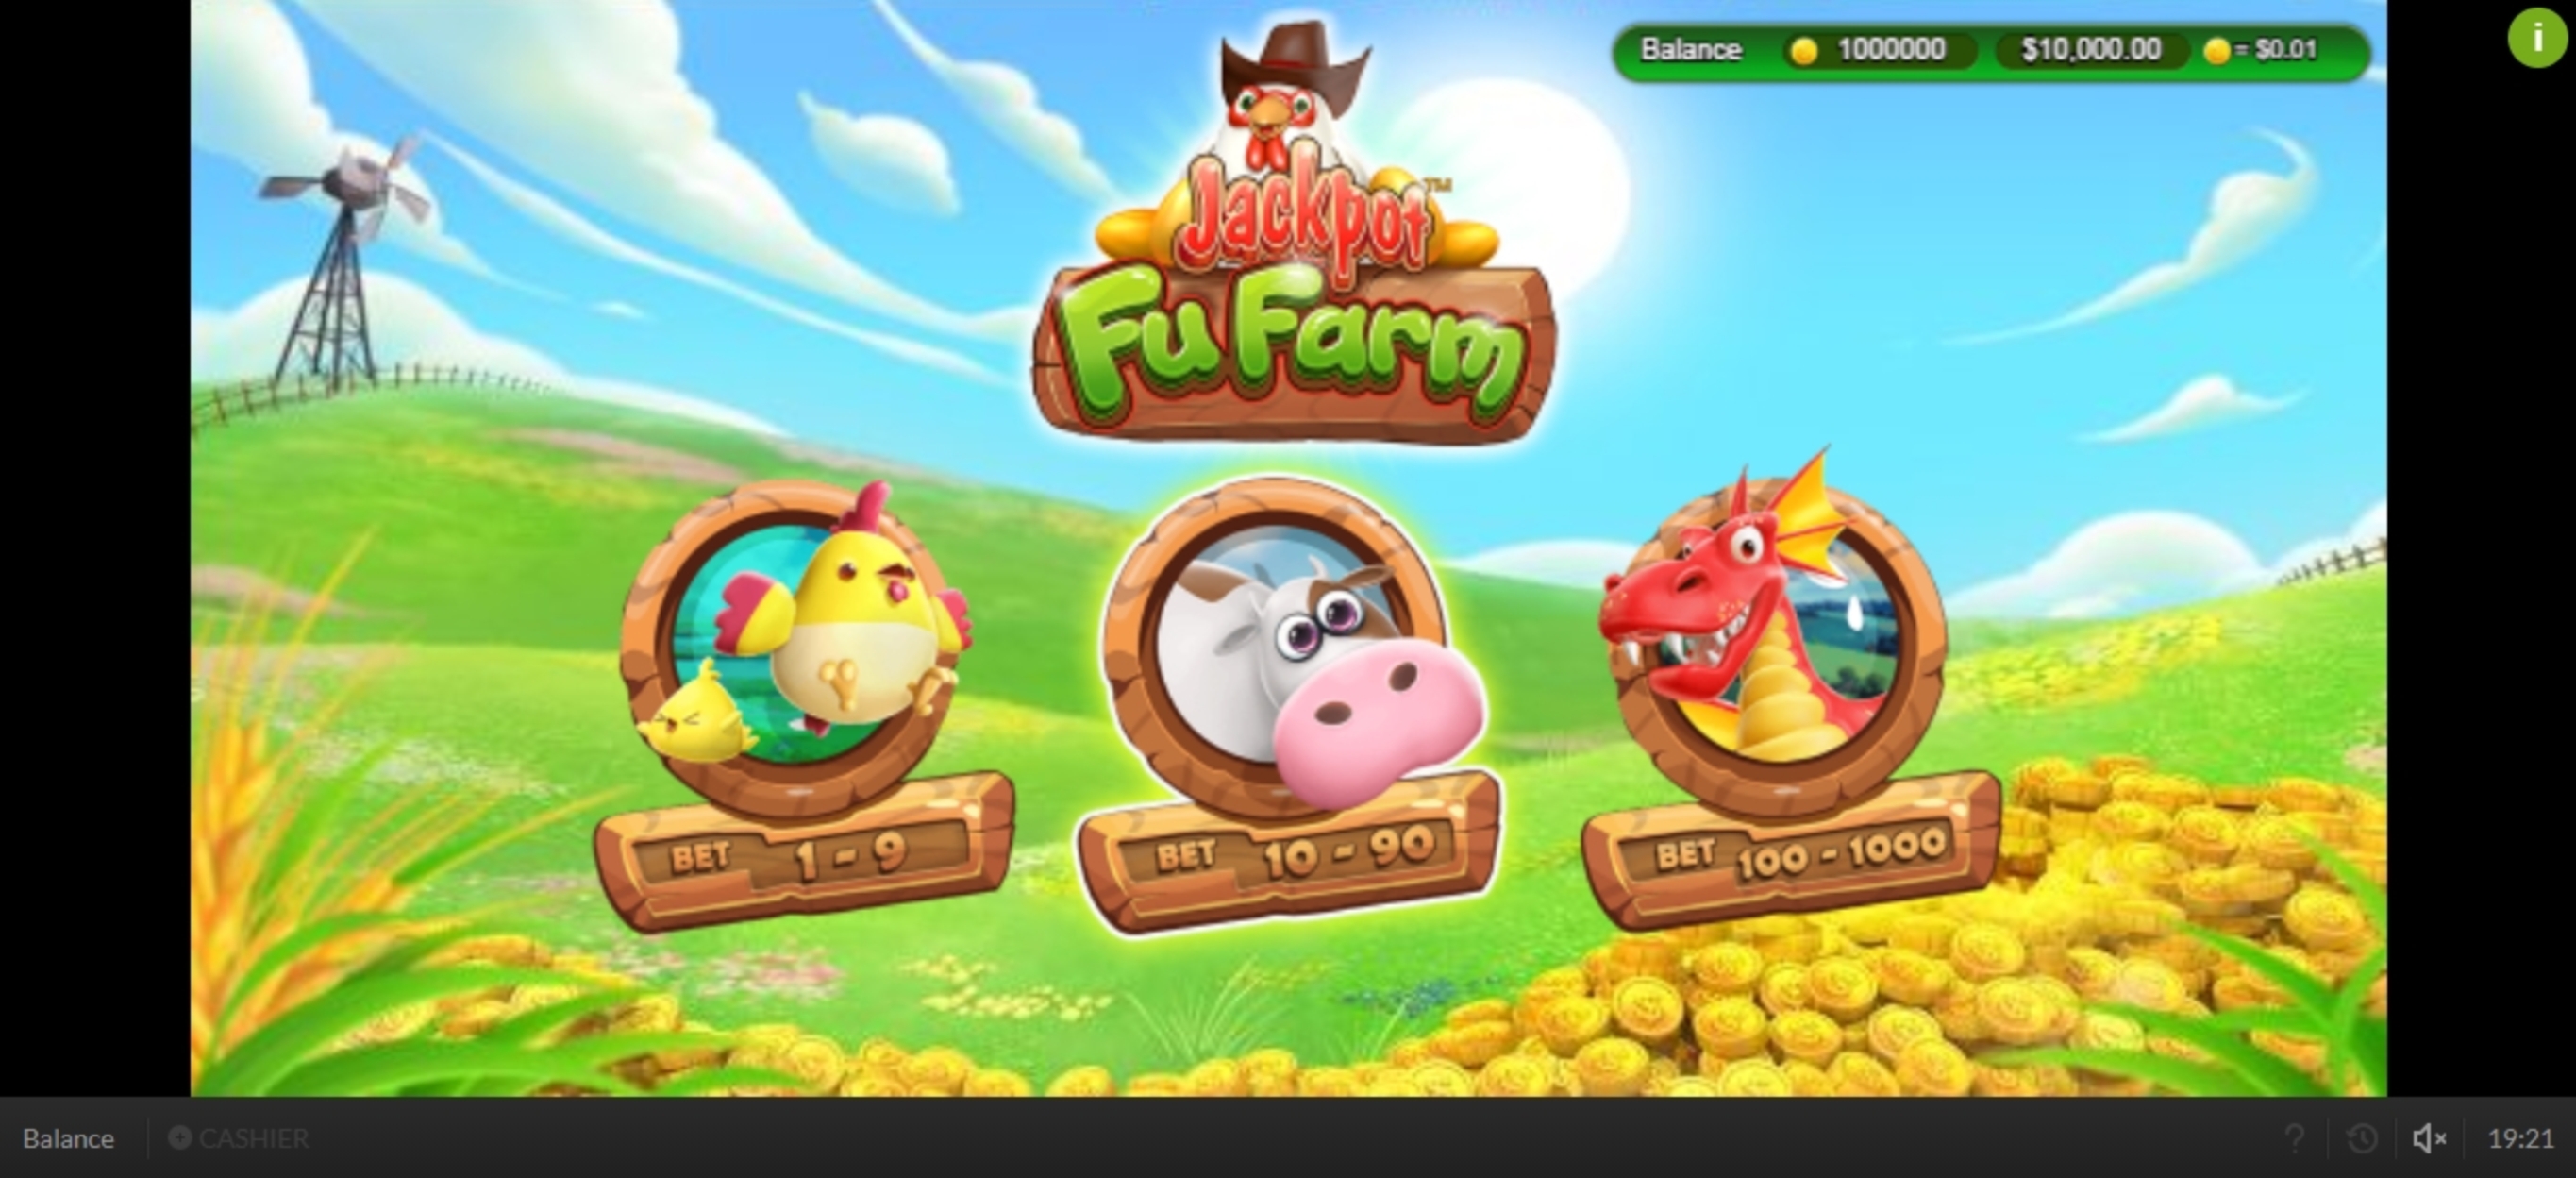 Play Fu Farm Jackpot Free Casino Slot Game by Skywind